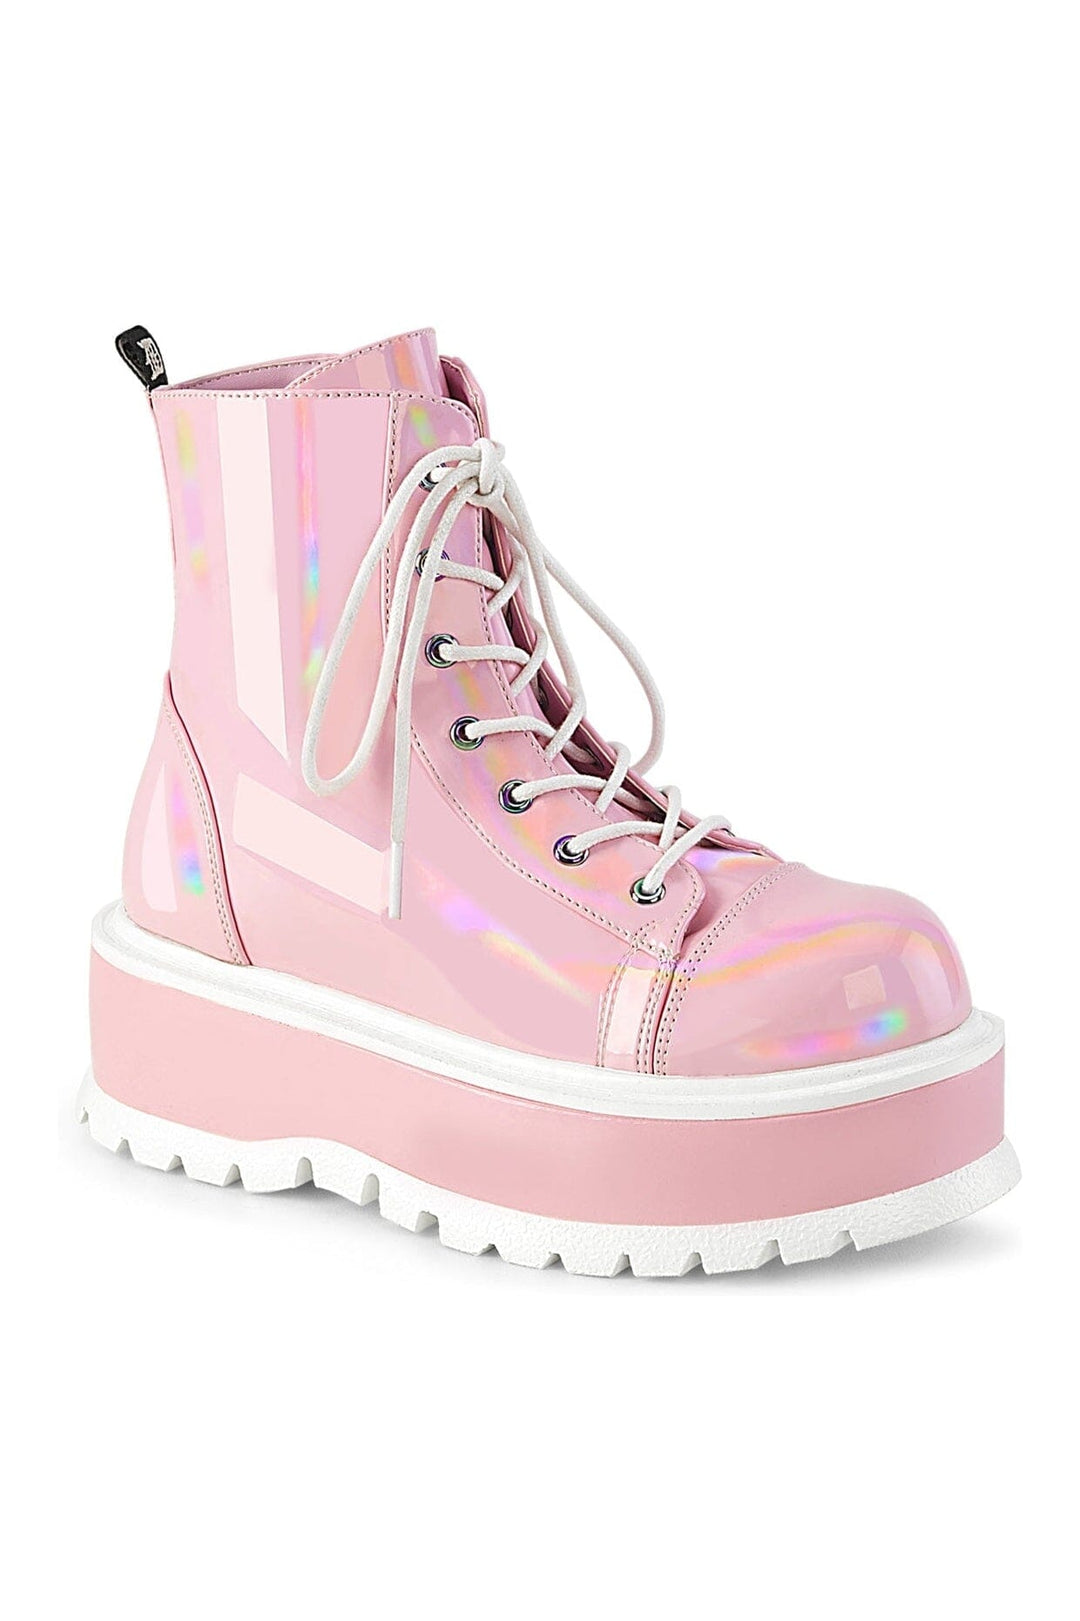 SLACKER-55 Pink Hologram Patent Ankle Boot-Ankle Boots-Demonia-Pink-10-Hologram Patent-SEXYSHOES.COM